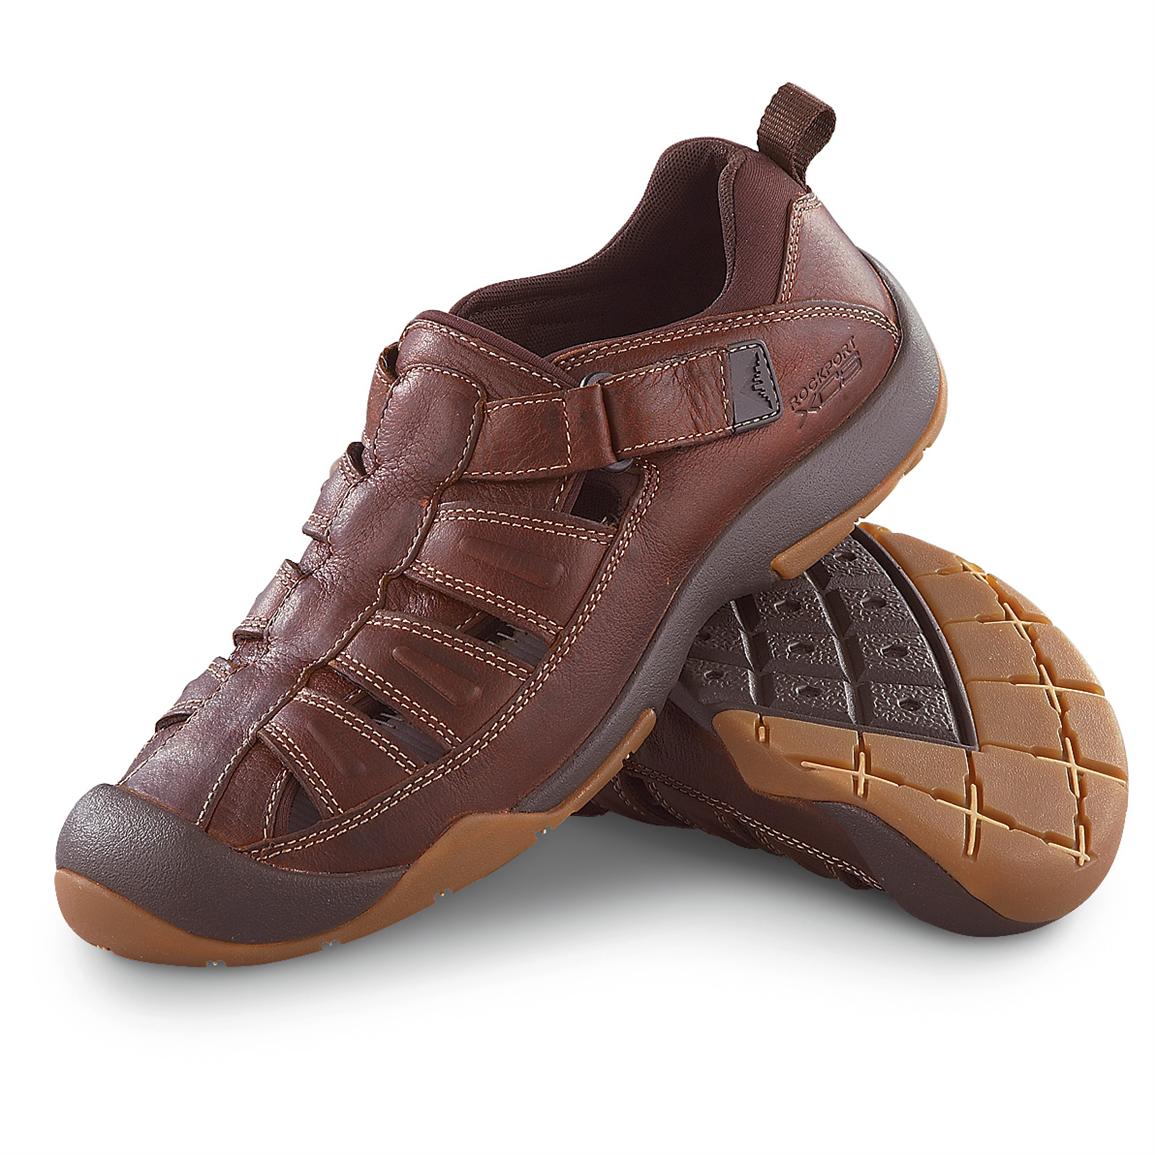  Men s  Rockport  Lambasa Sandals  Red Brown 162474 Sandals  at Sportsman s  Guide